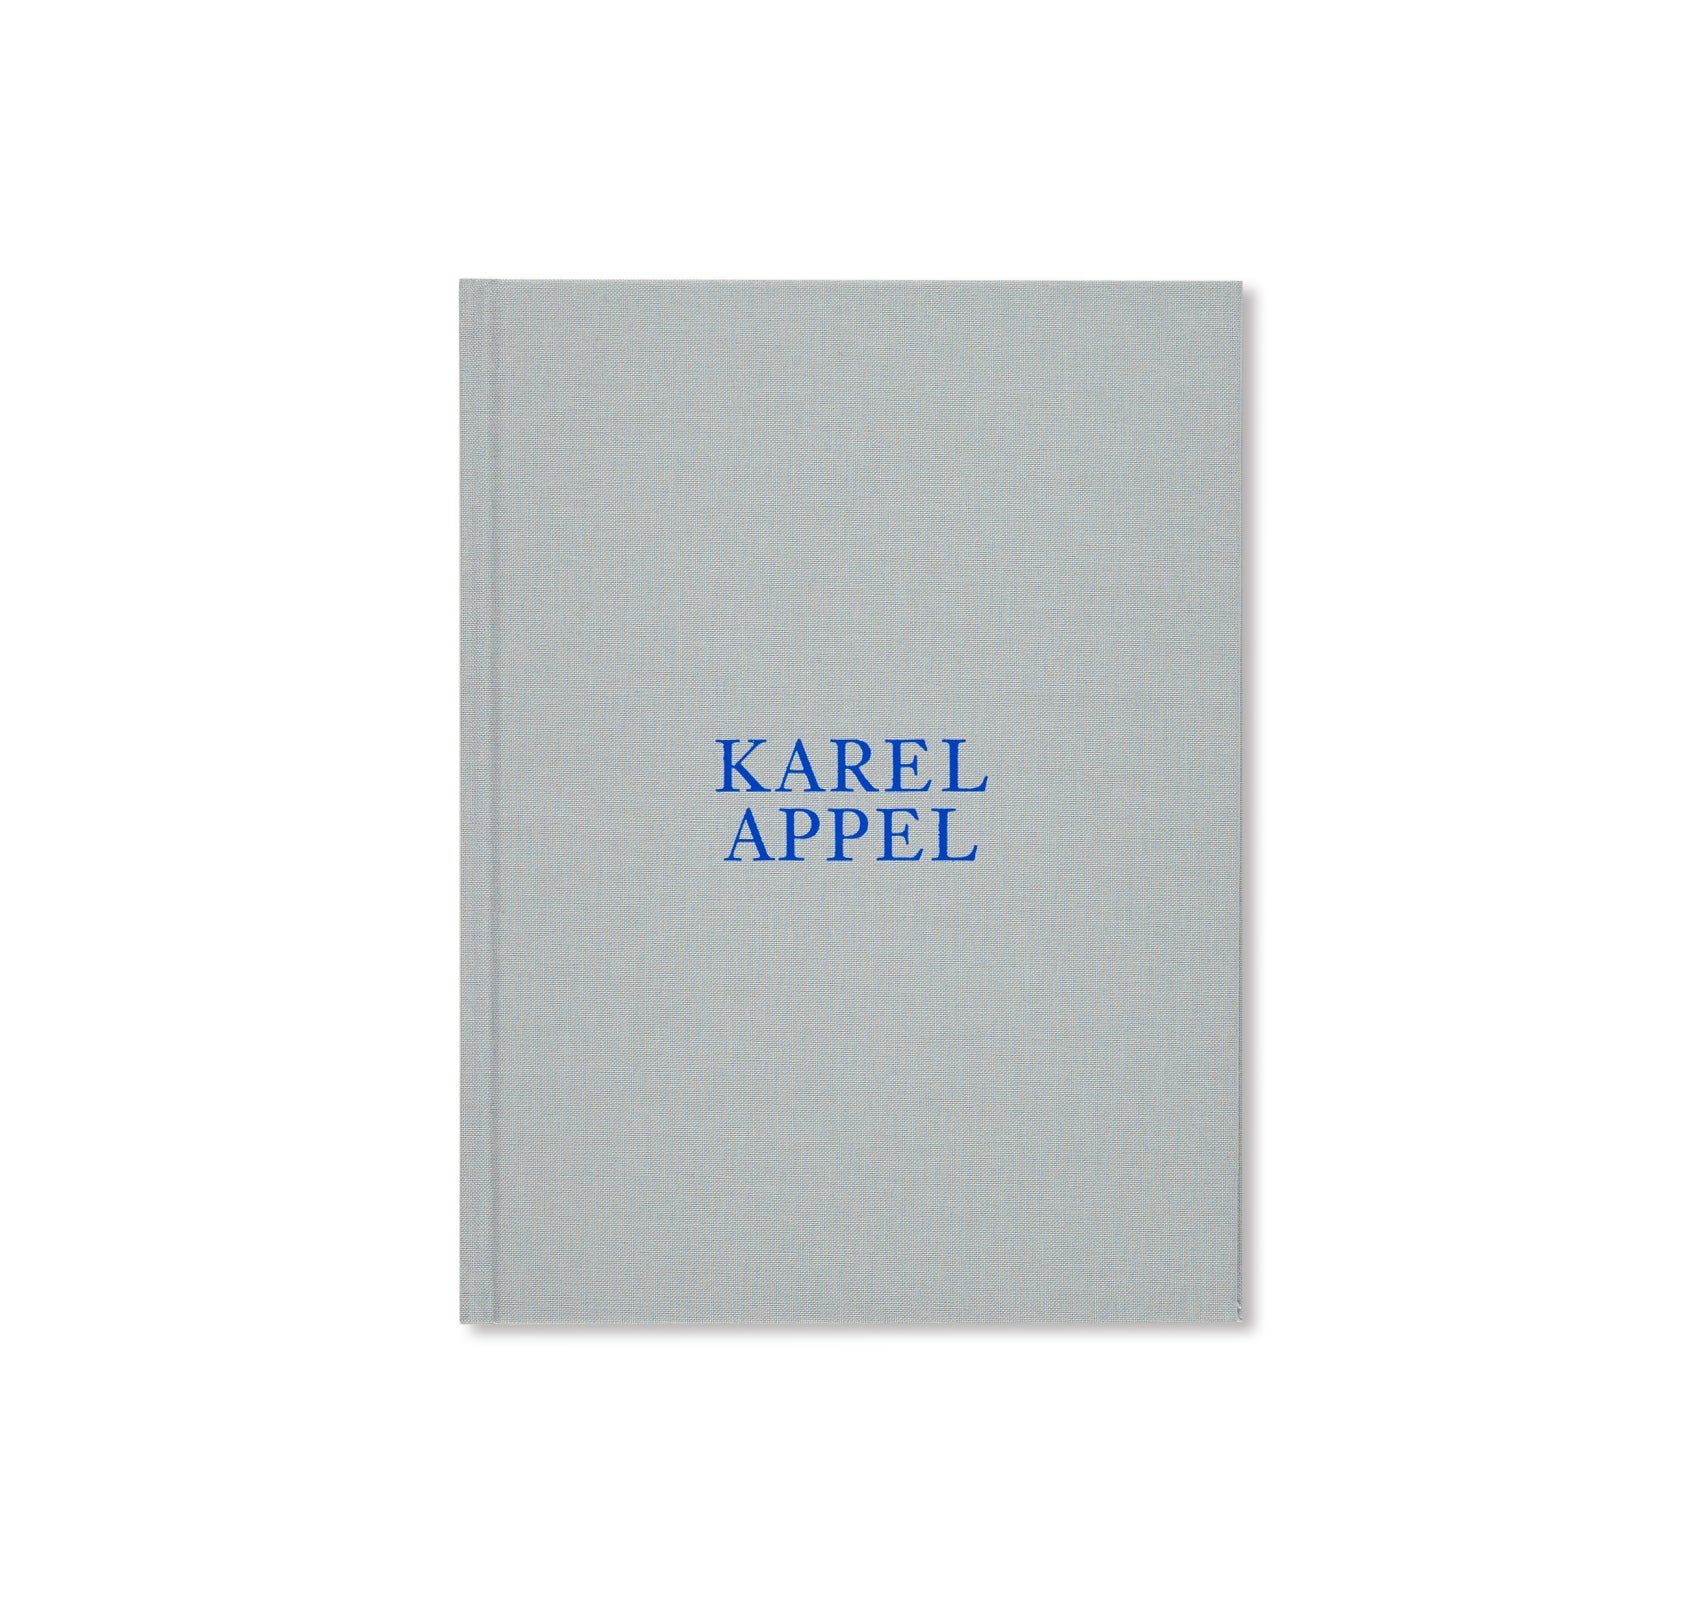 KAREL APPEL by Karel Appel